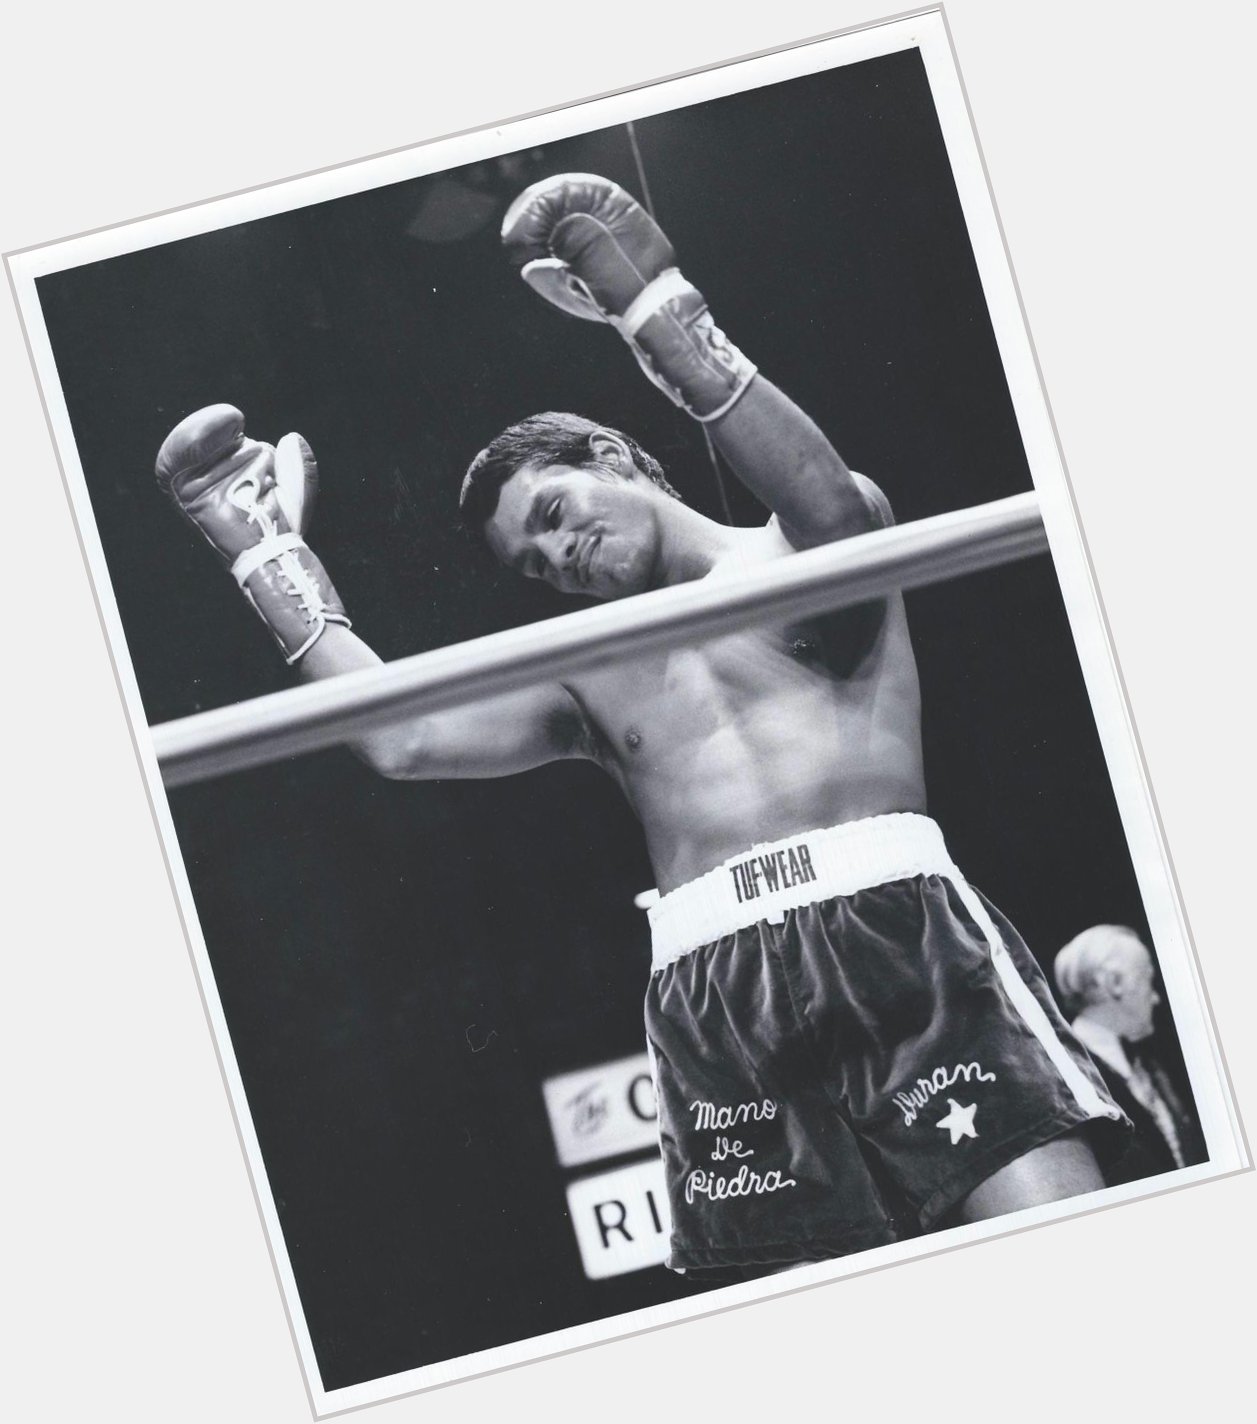 Happy birthday to the greatest lightweight of all time, Manos de Piedra, Roberto Duran.  